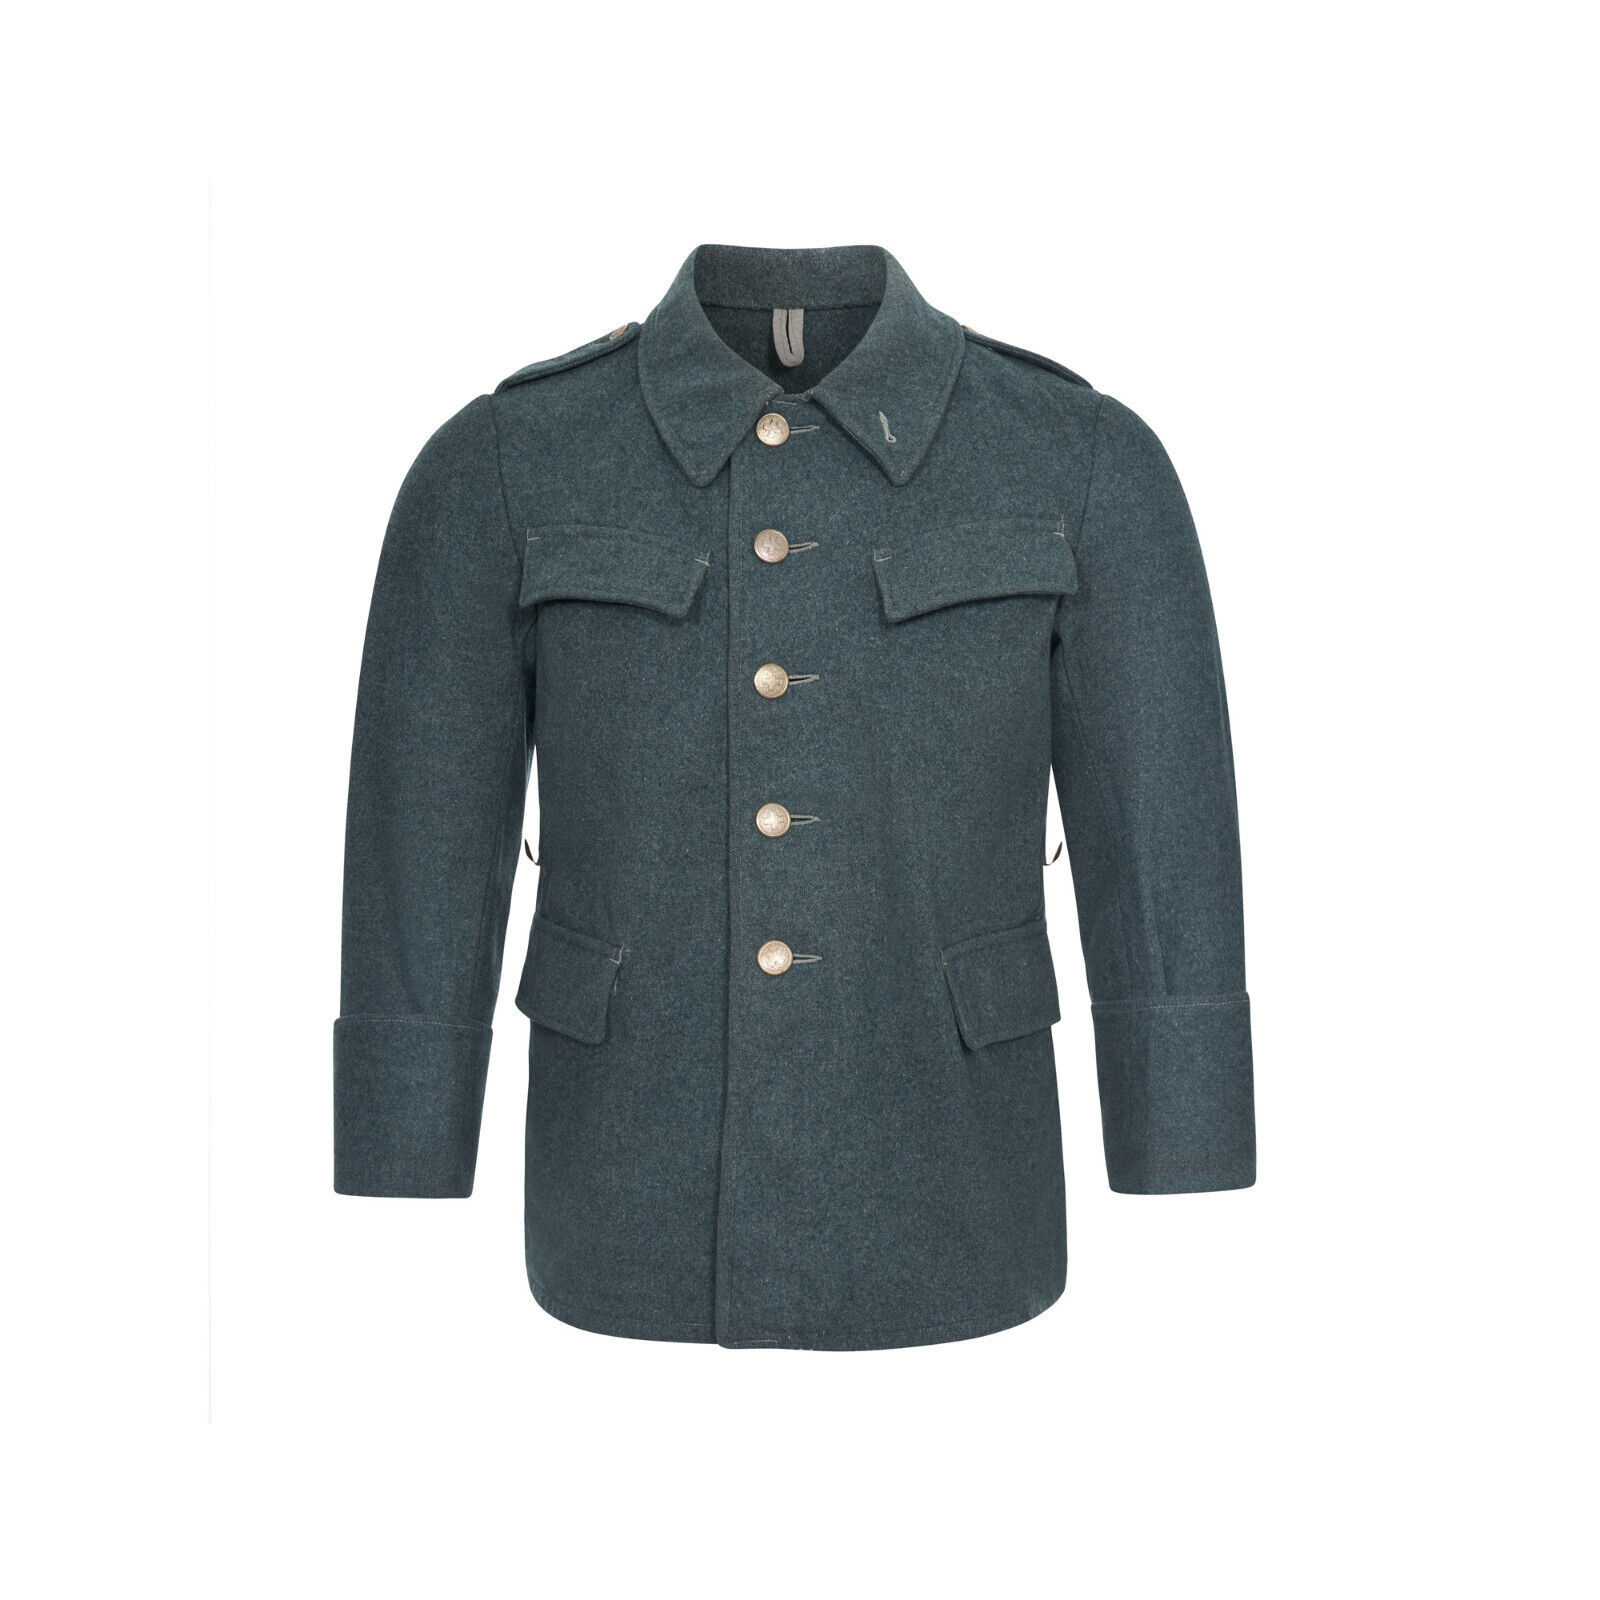 Wool Jacket Swiss Army Vintage Surplus Original Military Tunic Uniform Dress Top